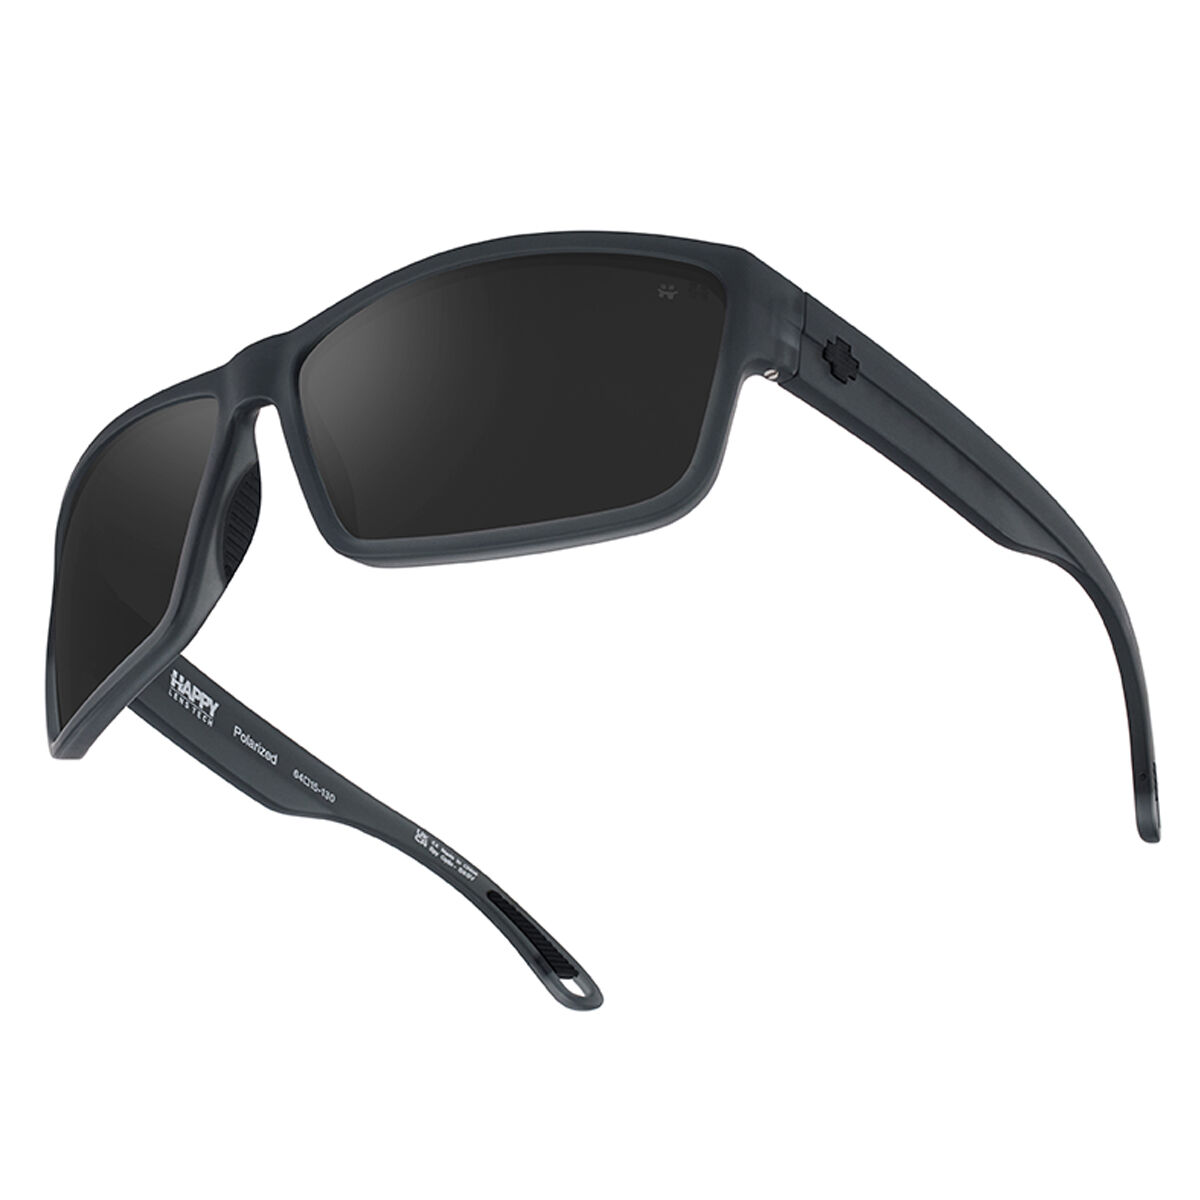 Specsnex sunglasses for men | gents sunglass | mens stylish sunglasses  polarized sunglasses